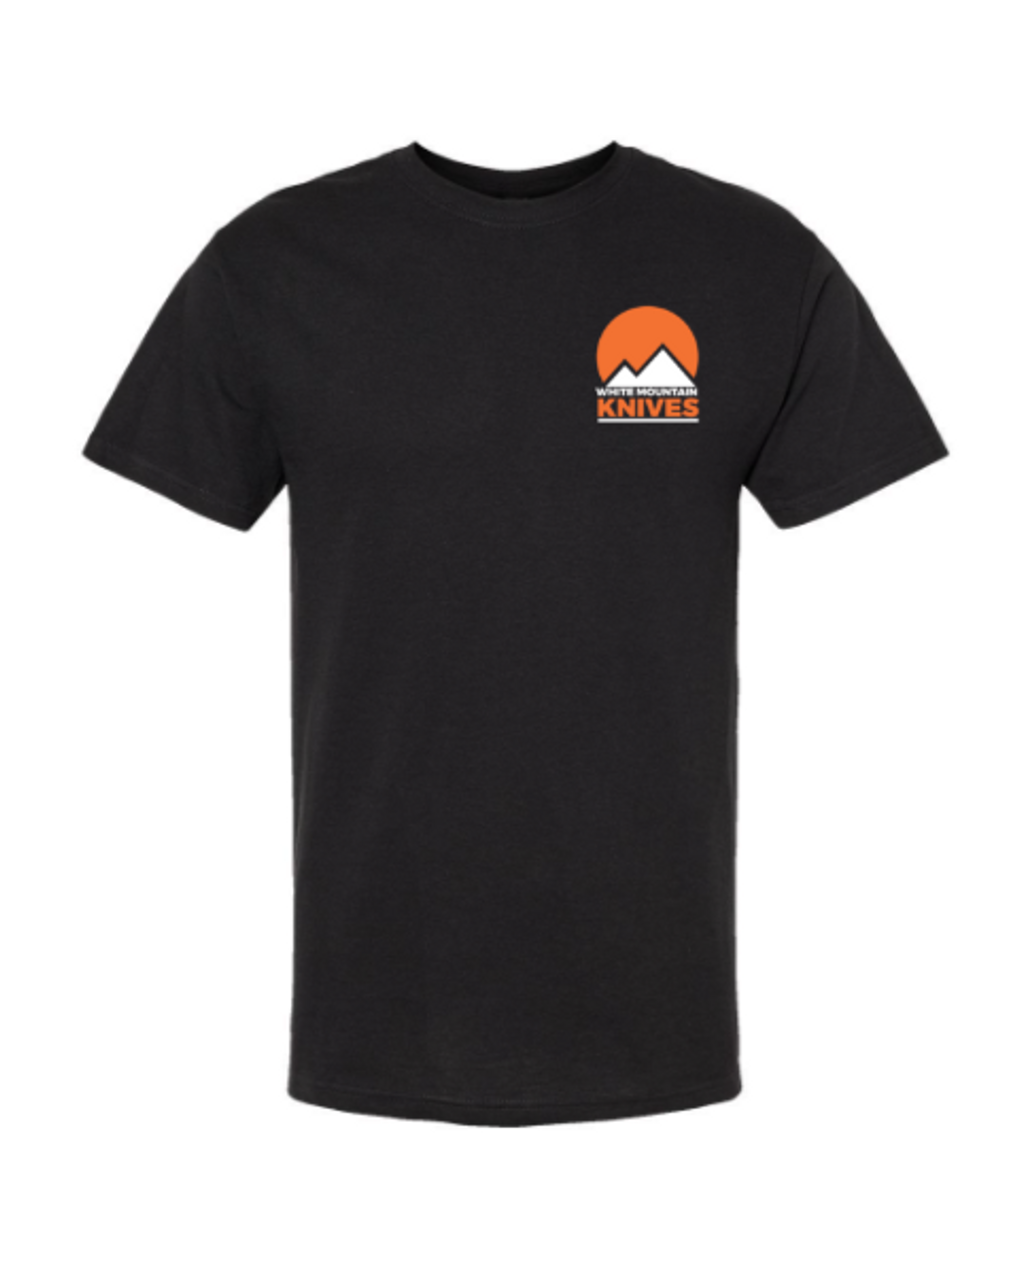 White Mountain Knives Black Short Sleeve T-Shirt Size Extra-Large XL